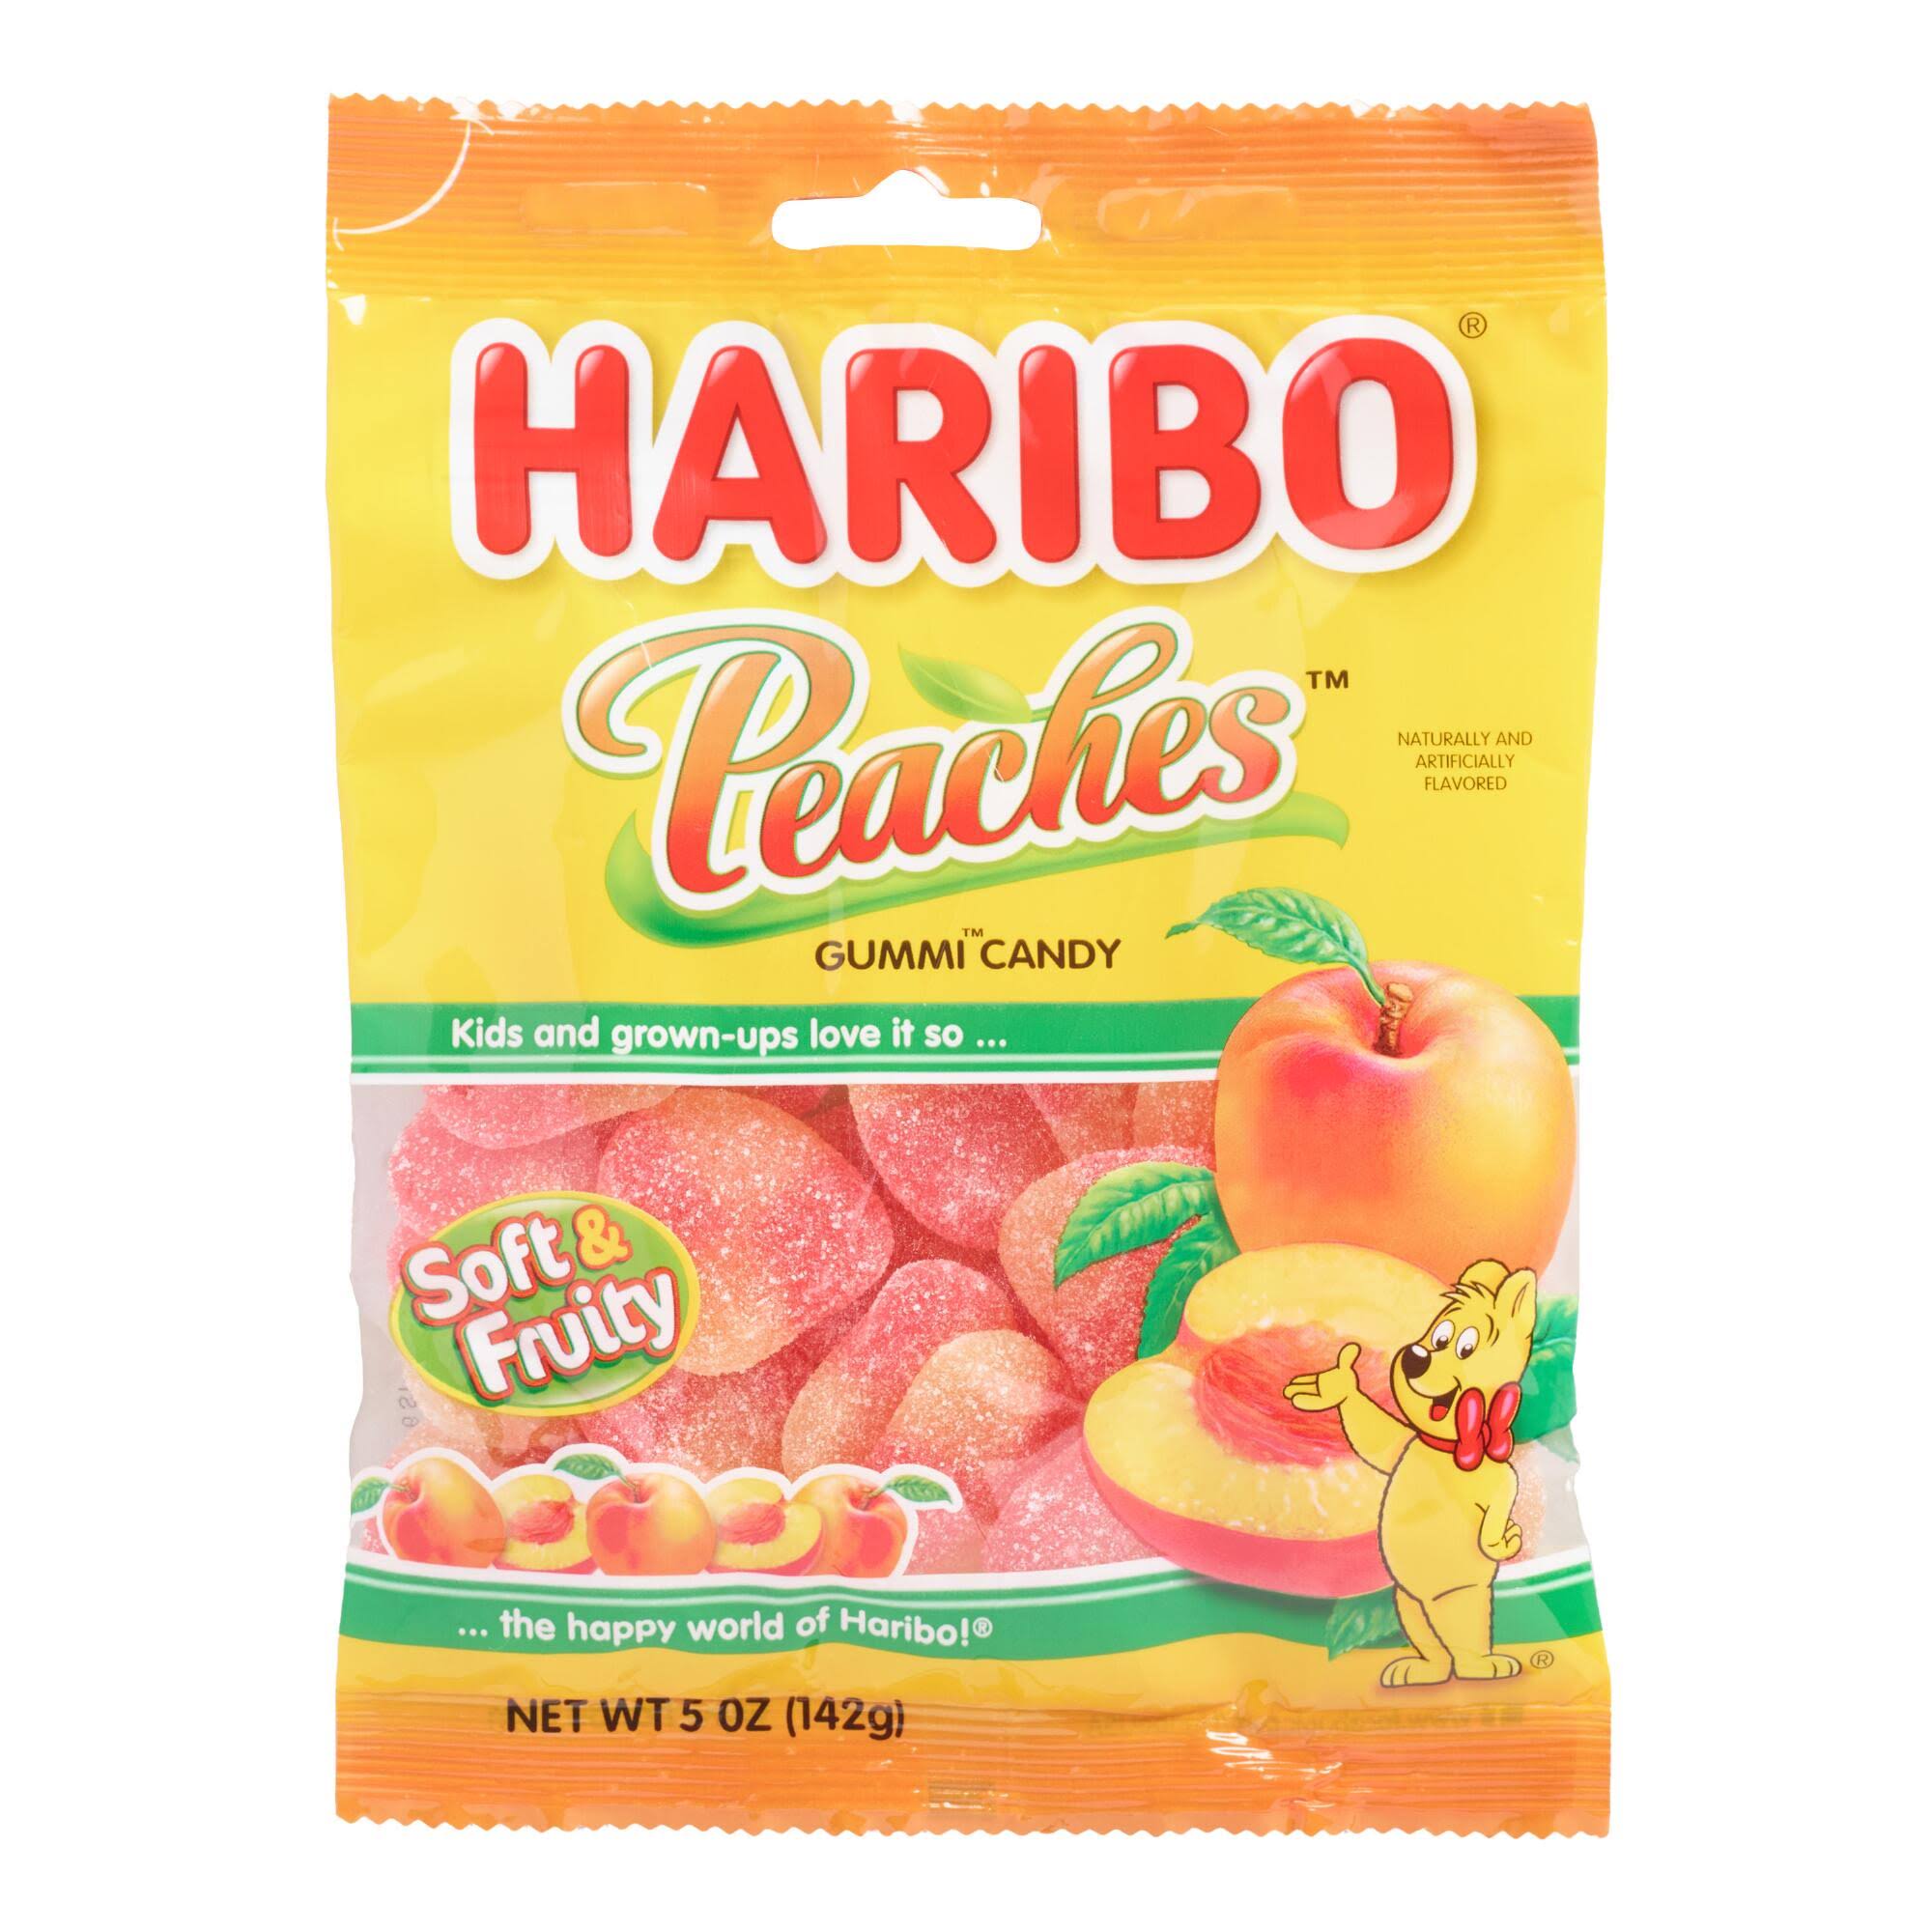 Haribo Gummi Candy - Peaches, 5oz